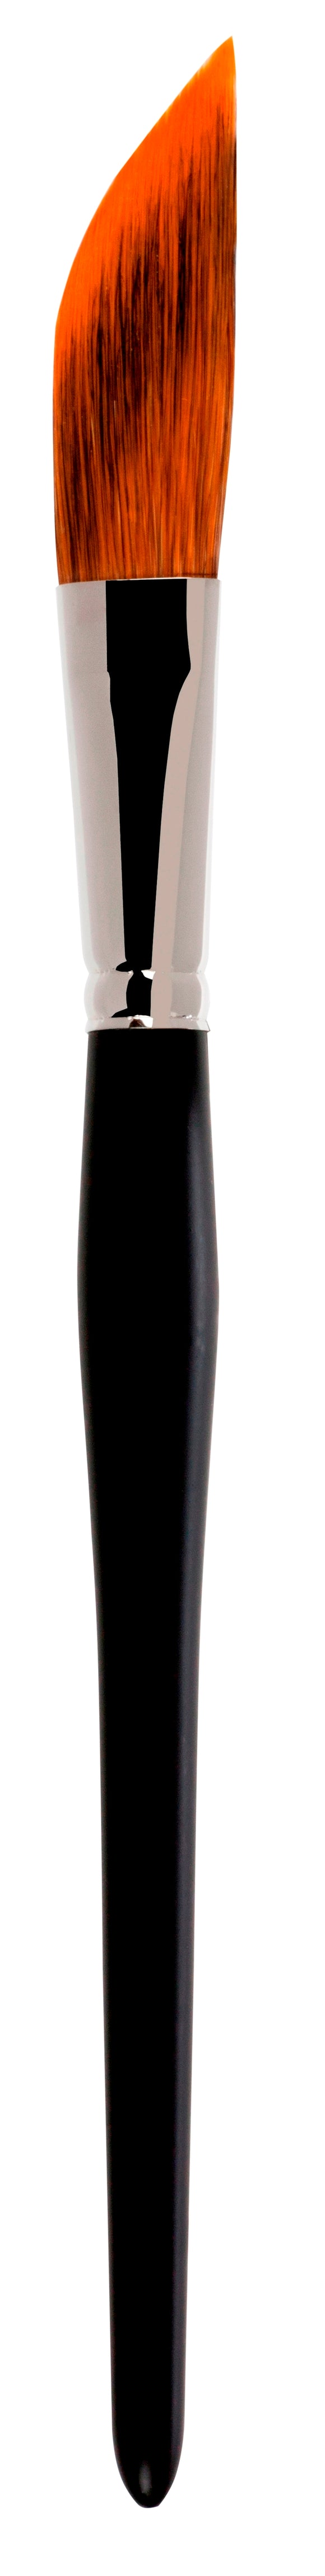 Zahn Dagger Striper Casin Synthetic-Squirrel Blend, 9289 Size 1/2